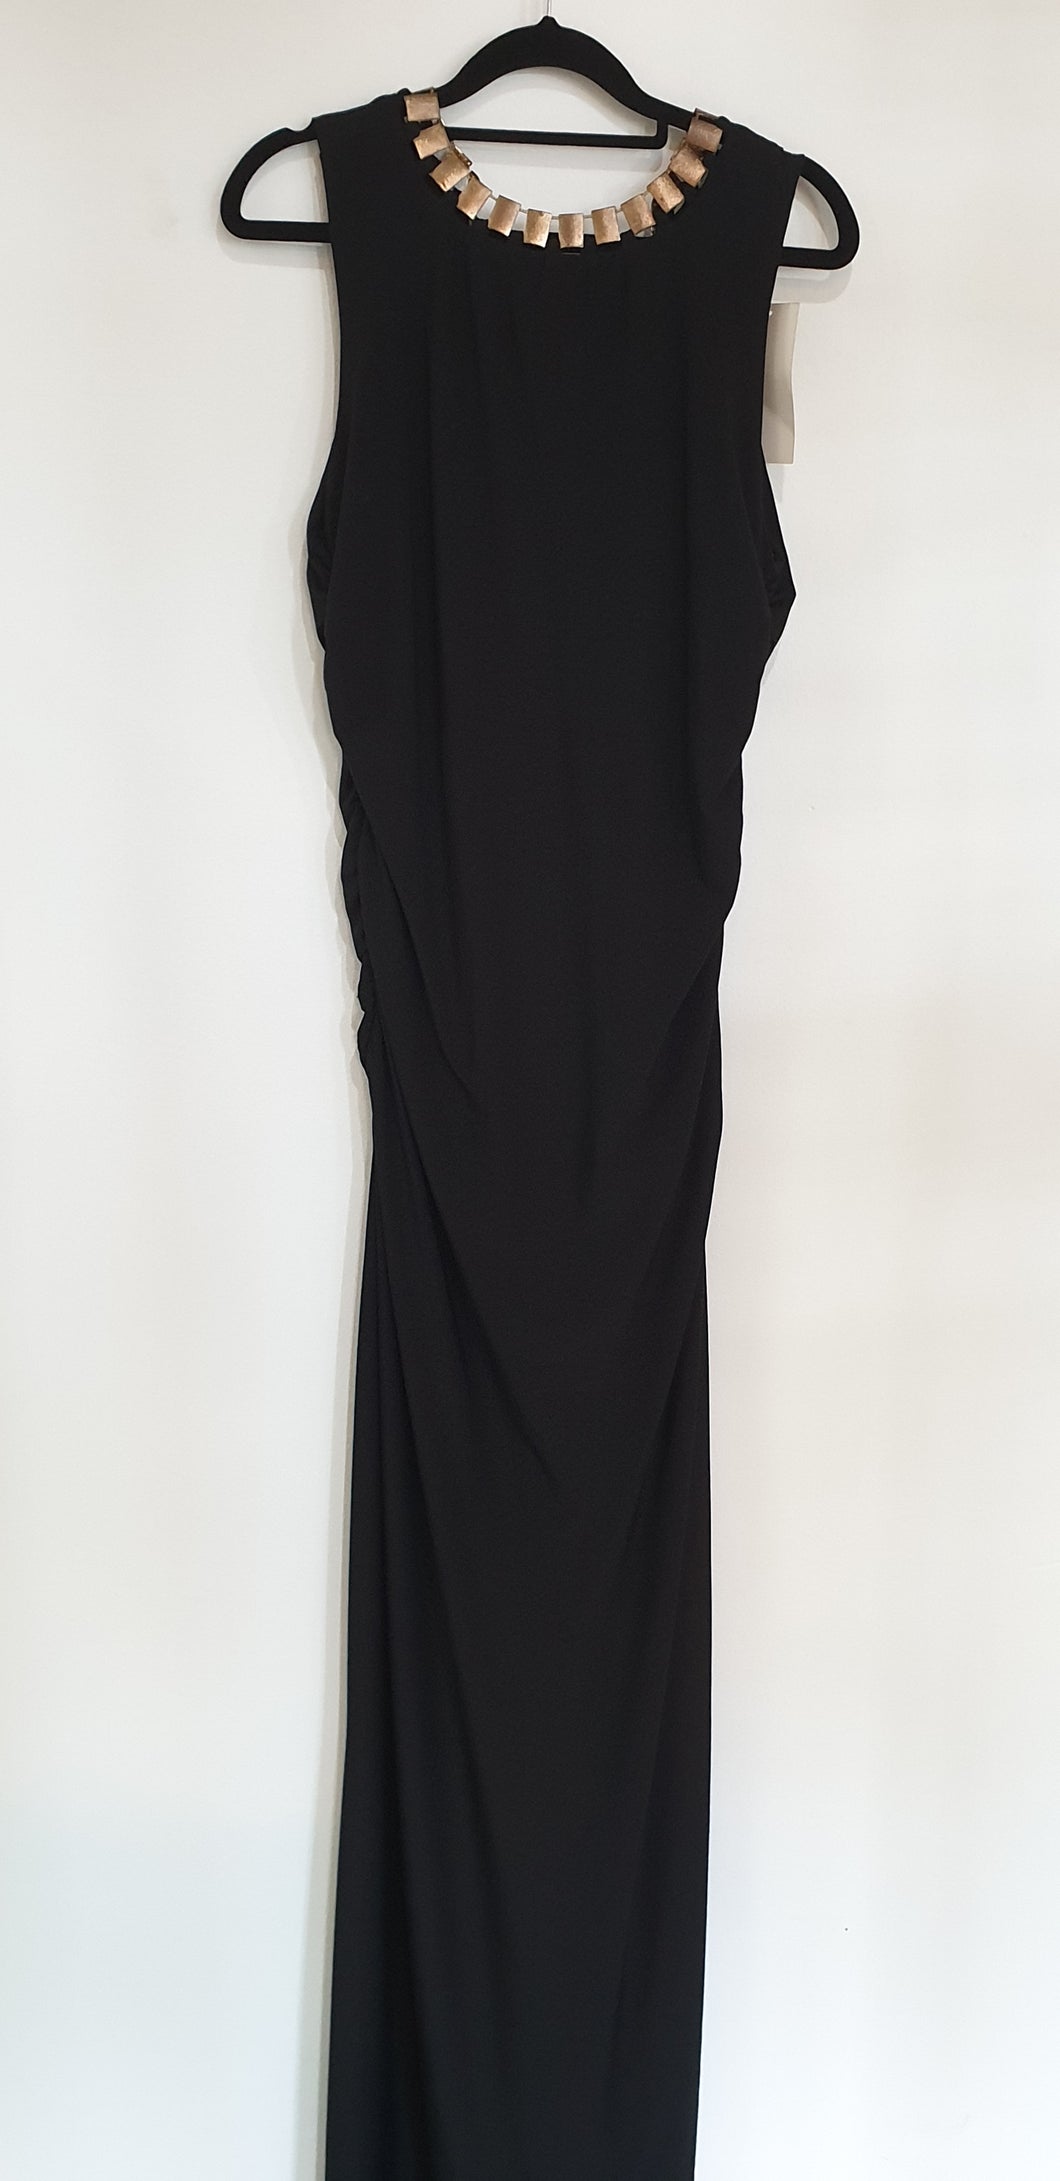 Black Embellished Bodycon Dress